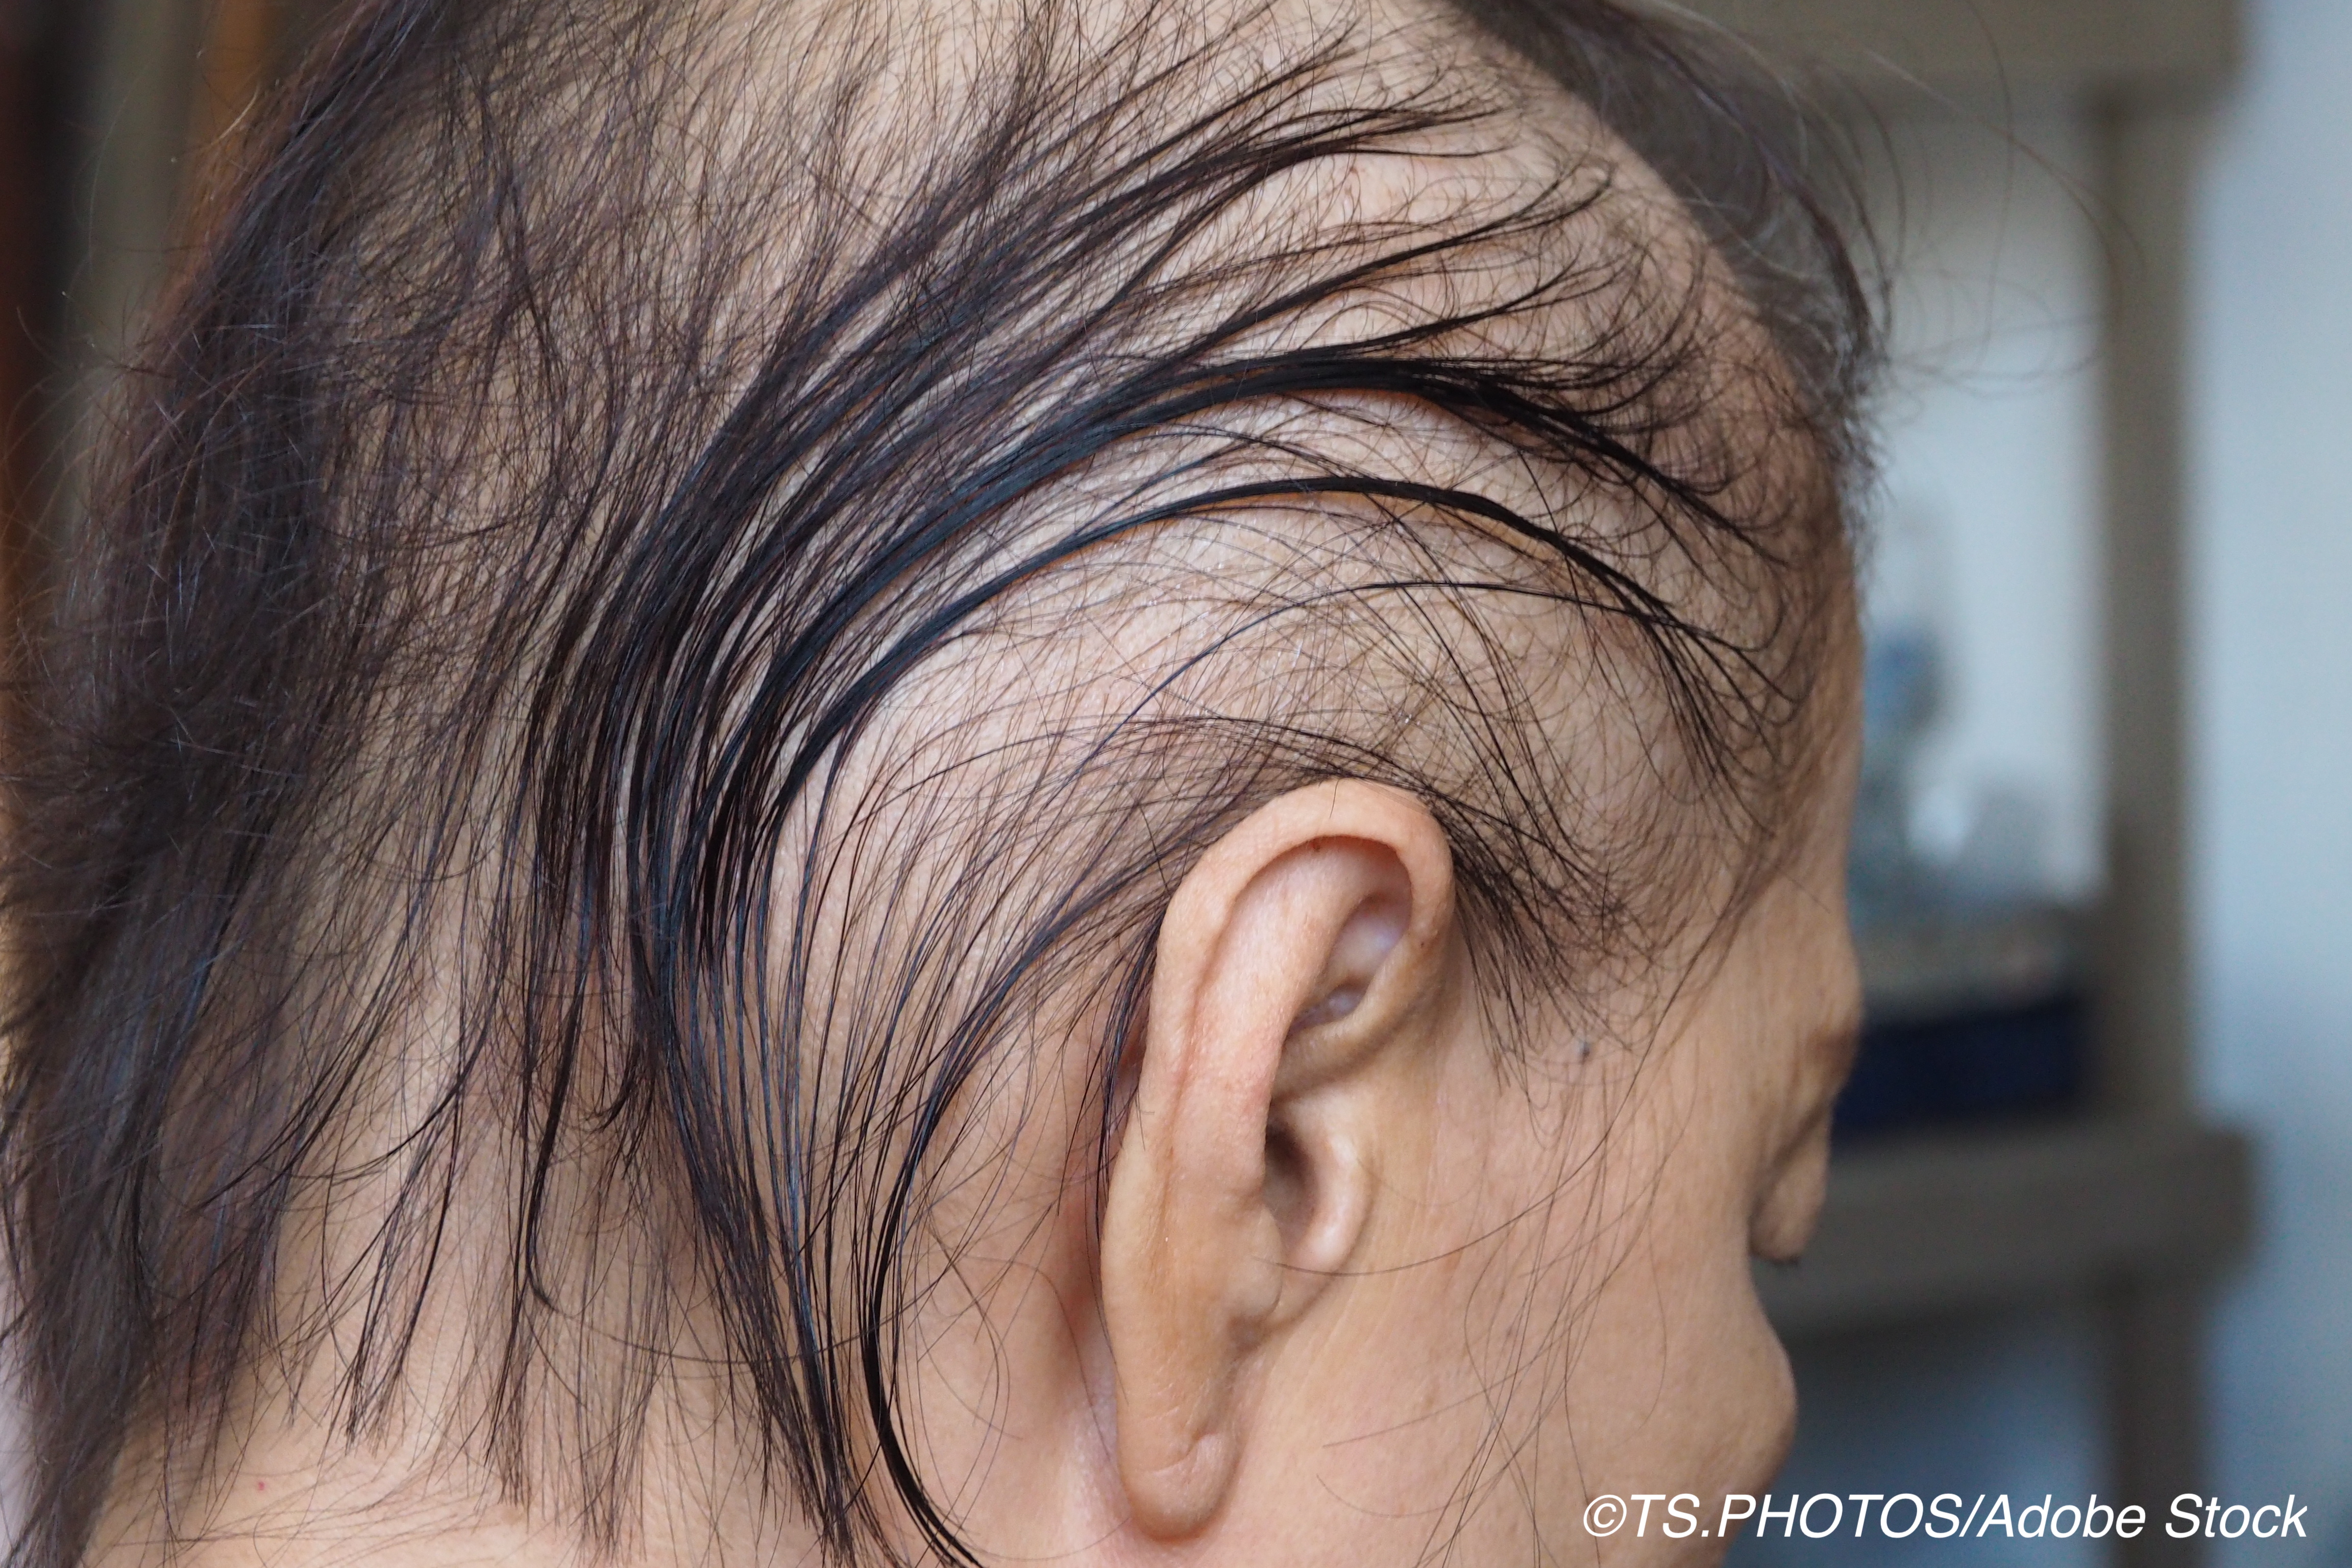 Minoxidil 5% May Help Counter Radiation-Induced Hair Loss